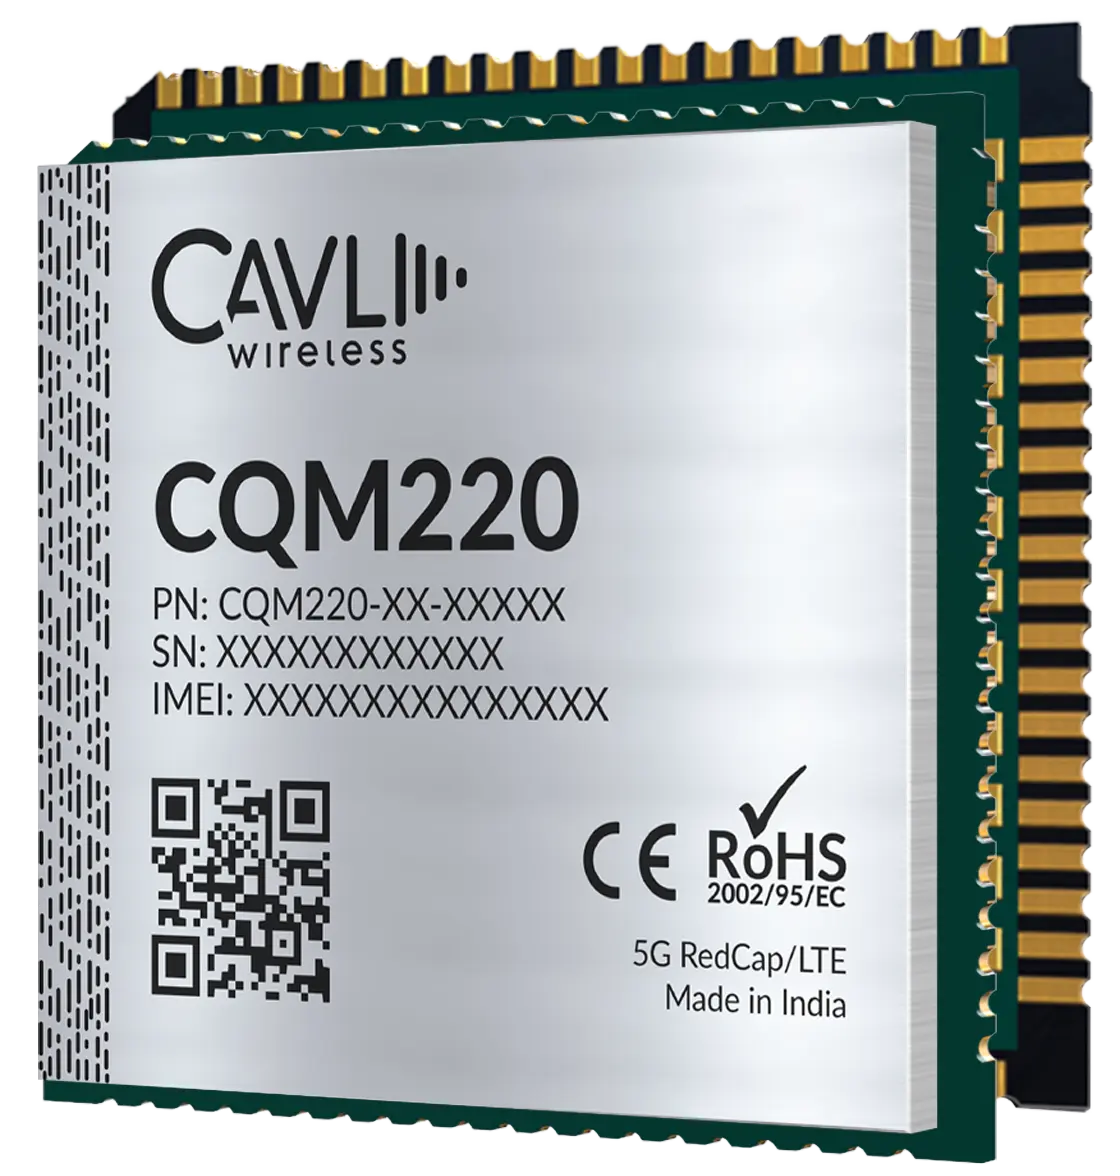 CQM220 5G RedCap IoT Module